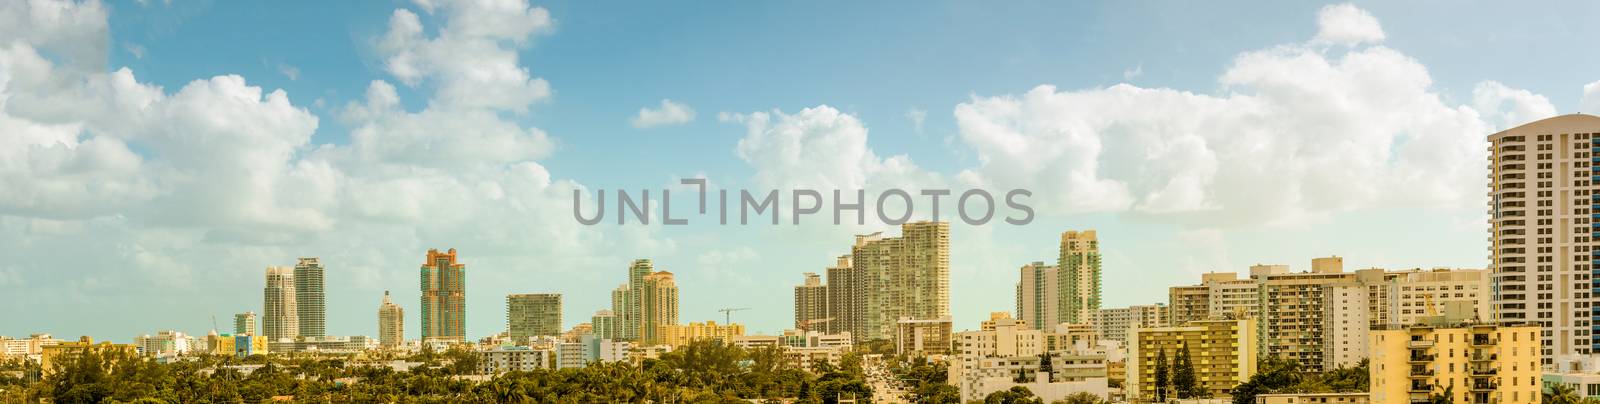 Panorama of South Beach by whitechild